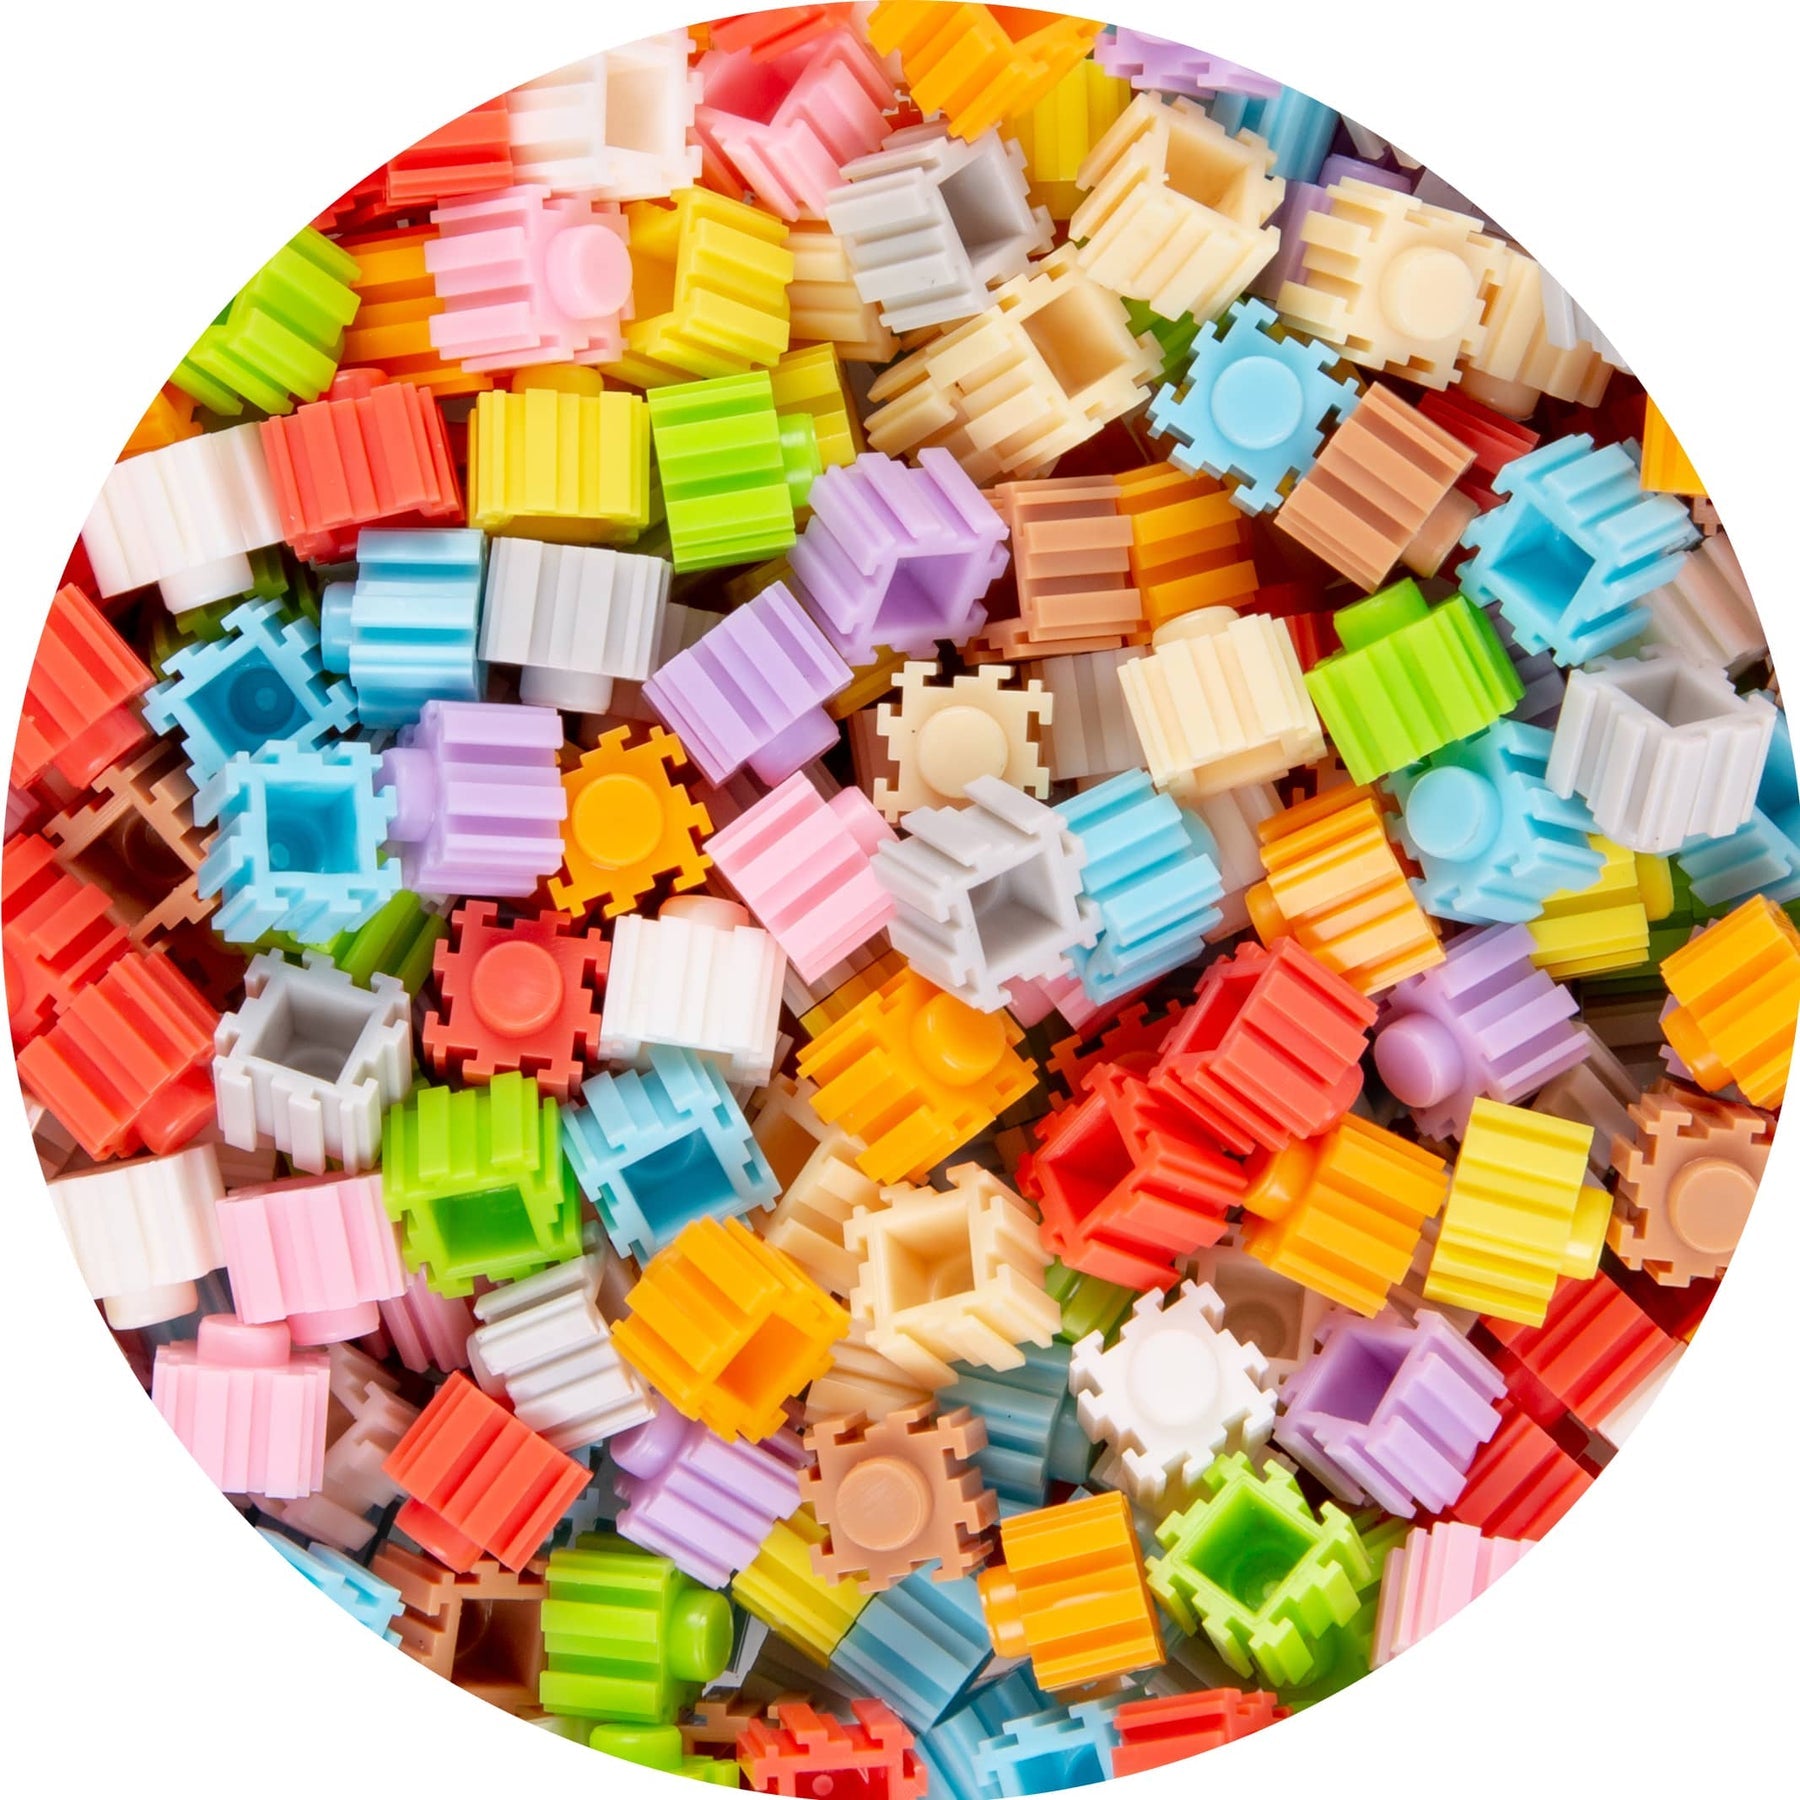 Pix Brix Pixel Art Puzzle Bricks, Mixed Bulk Brix - 1,500 Pieces (500  Light, 500 Medium, 500 Dark) - Interlocking Building Bricks, Create 2D and  3D